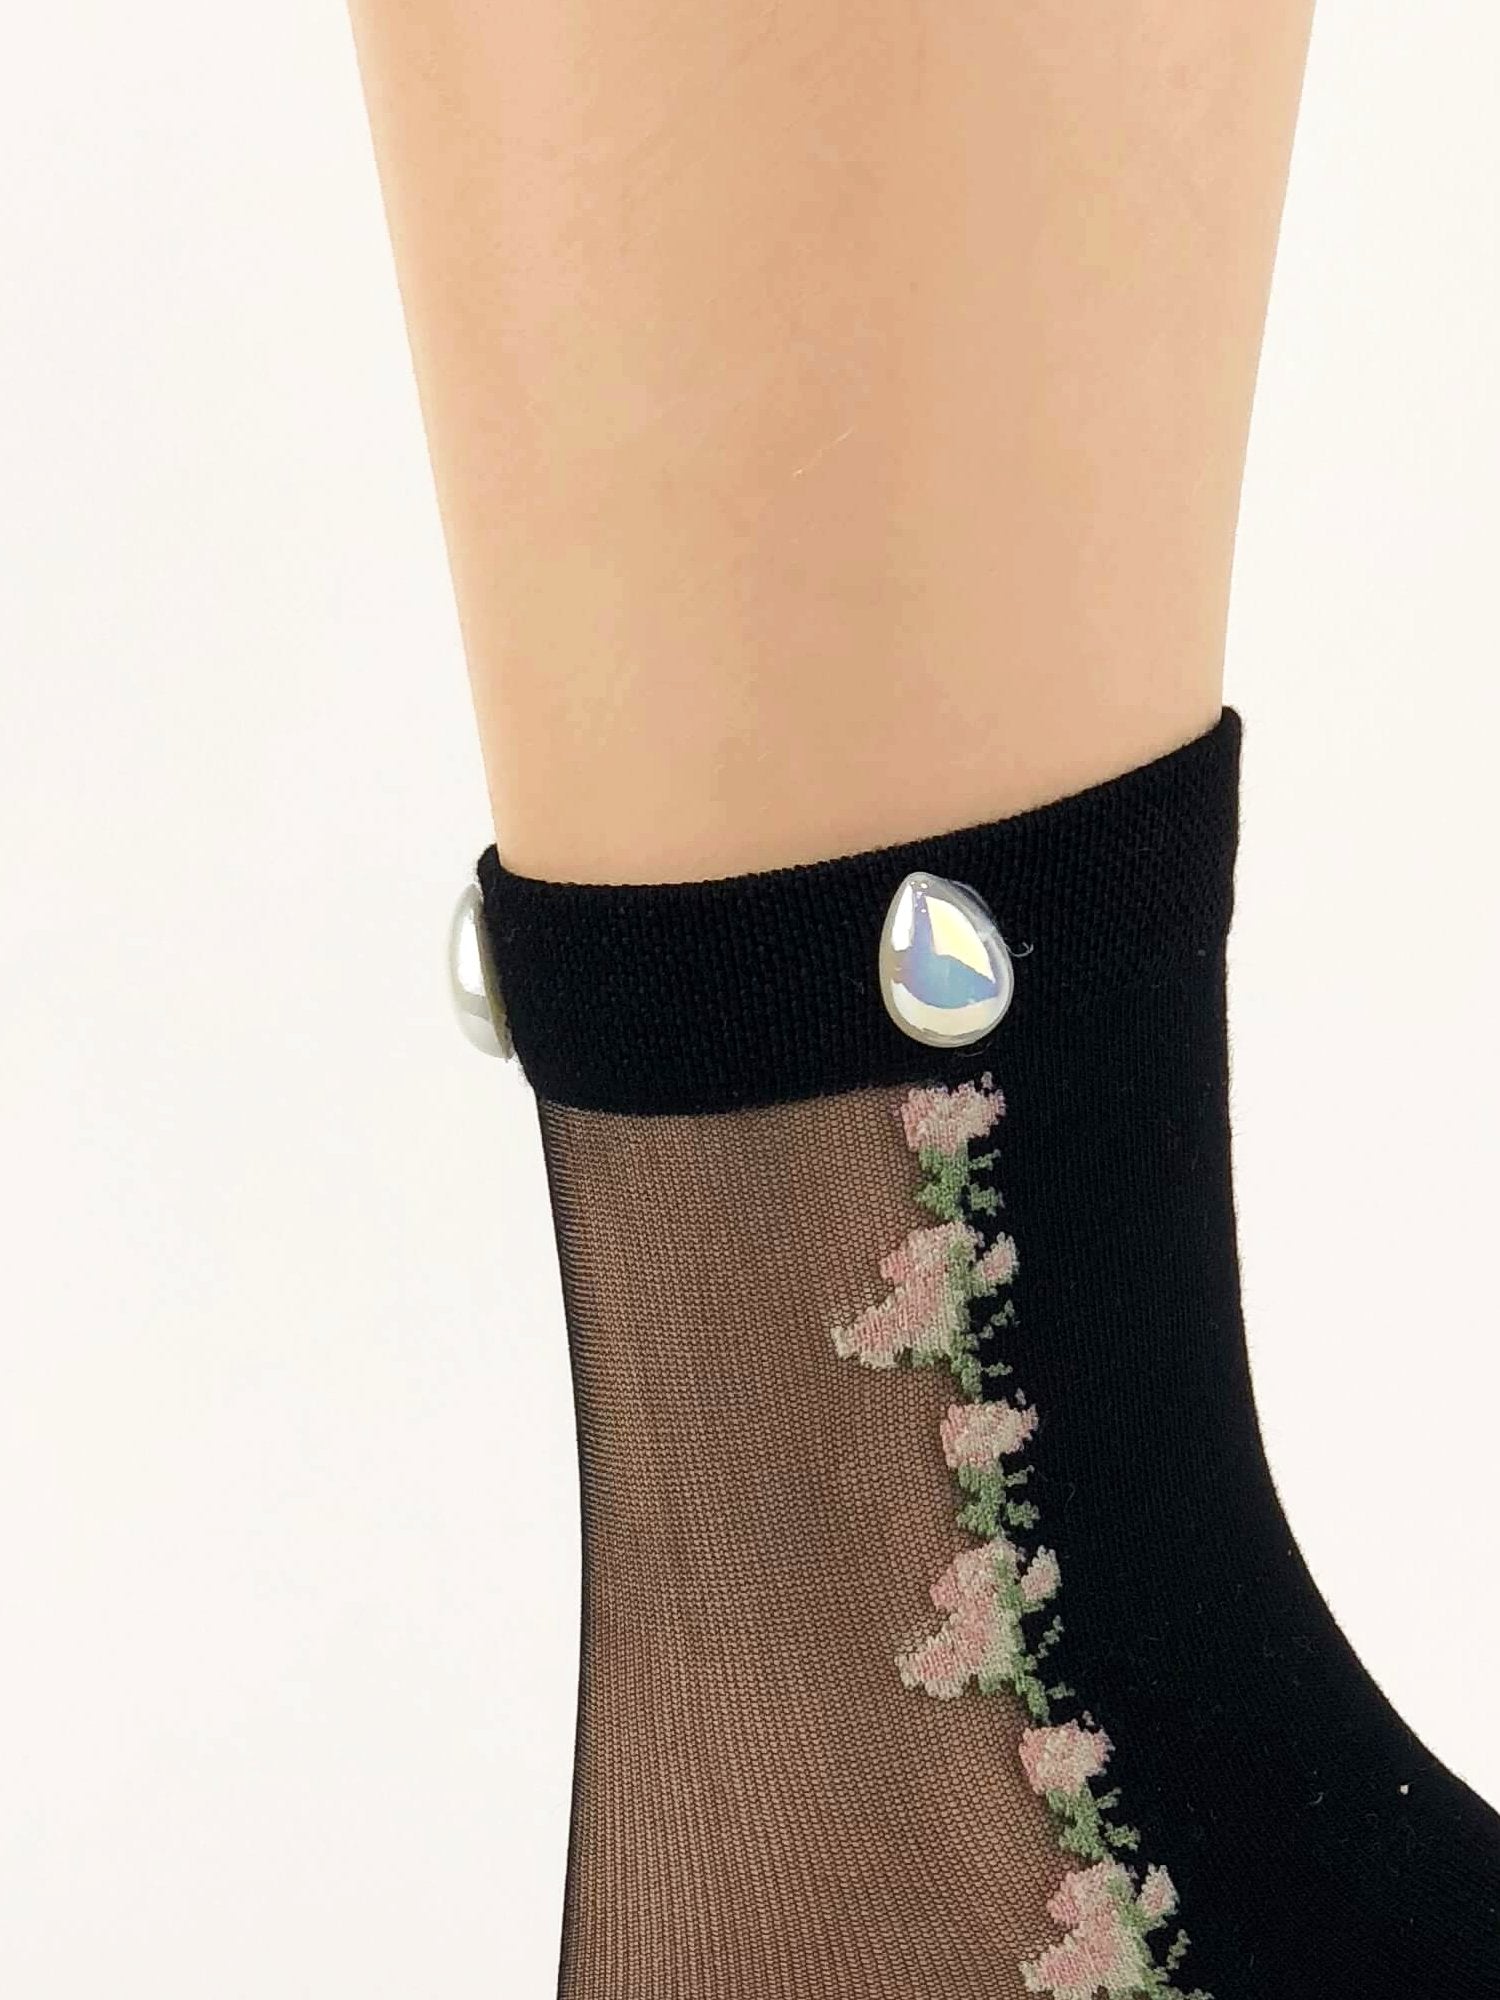 Elegant Mini Pink Flowers Sheer Socks - Global Trendz Fashion®